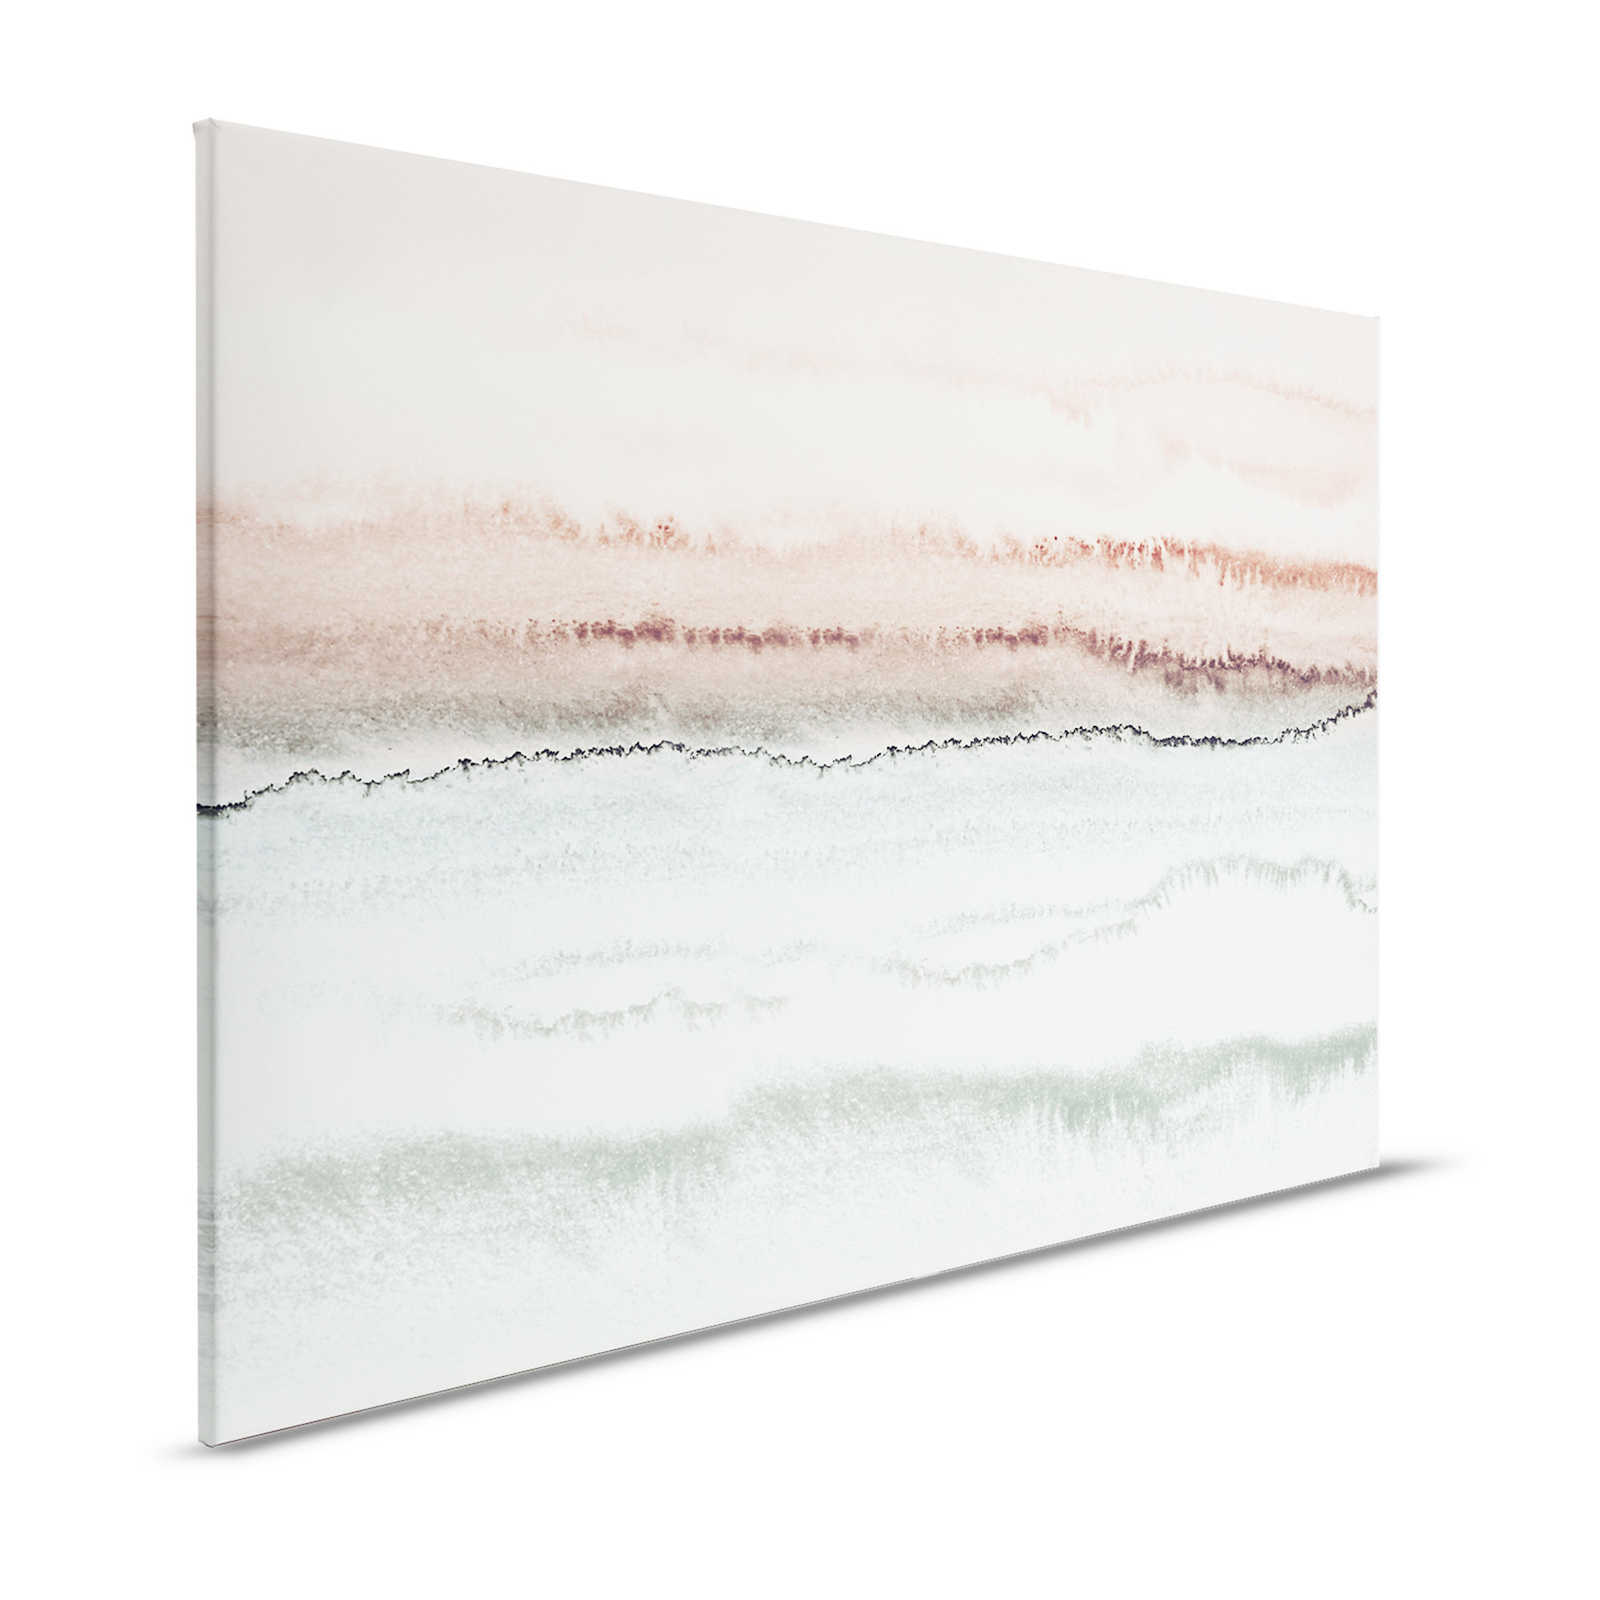         Aquarell Leinwandbild mit abstrakter Landschaft & Farbverlauf – 1,20 m x 0,80 m
    